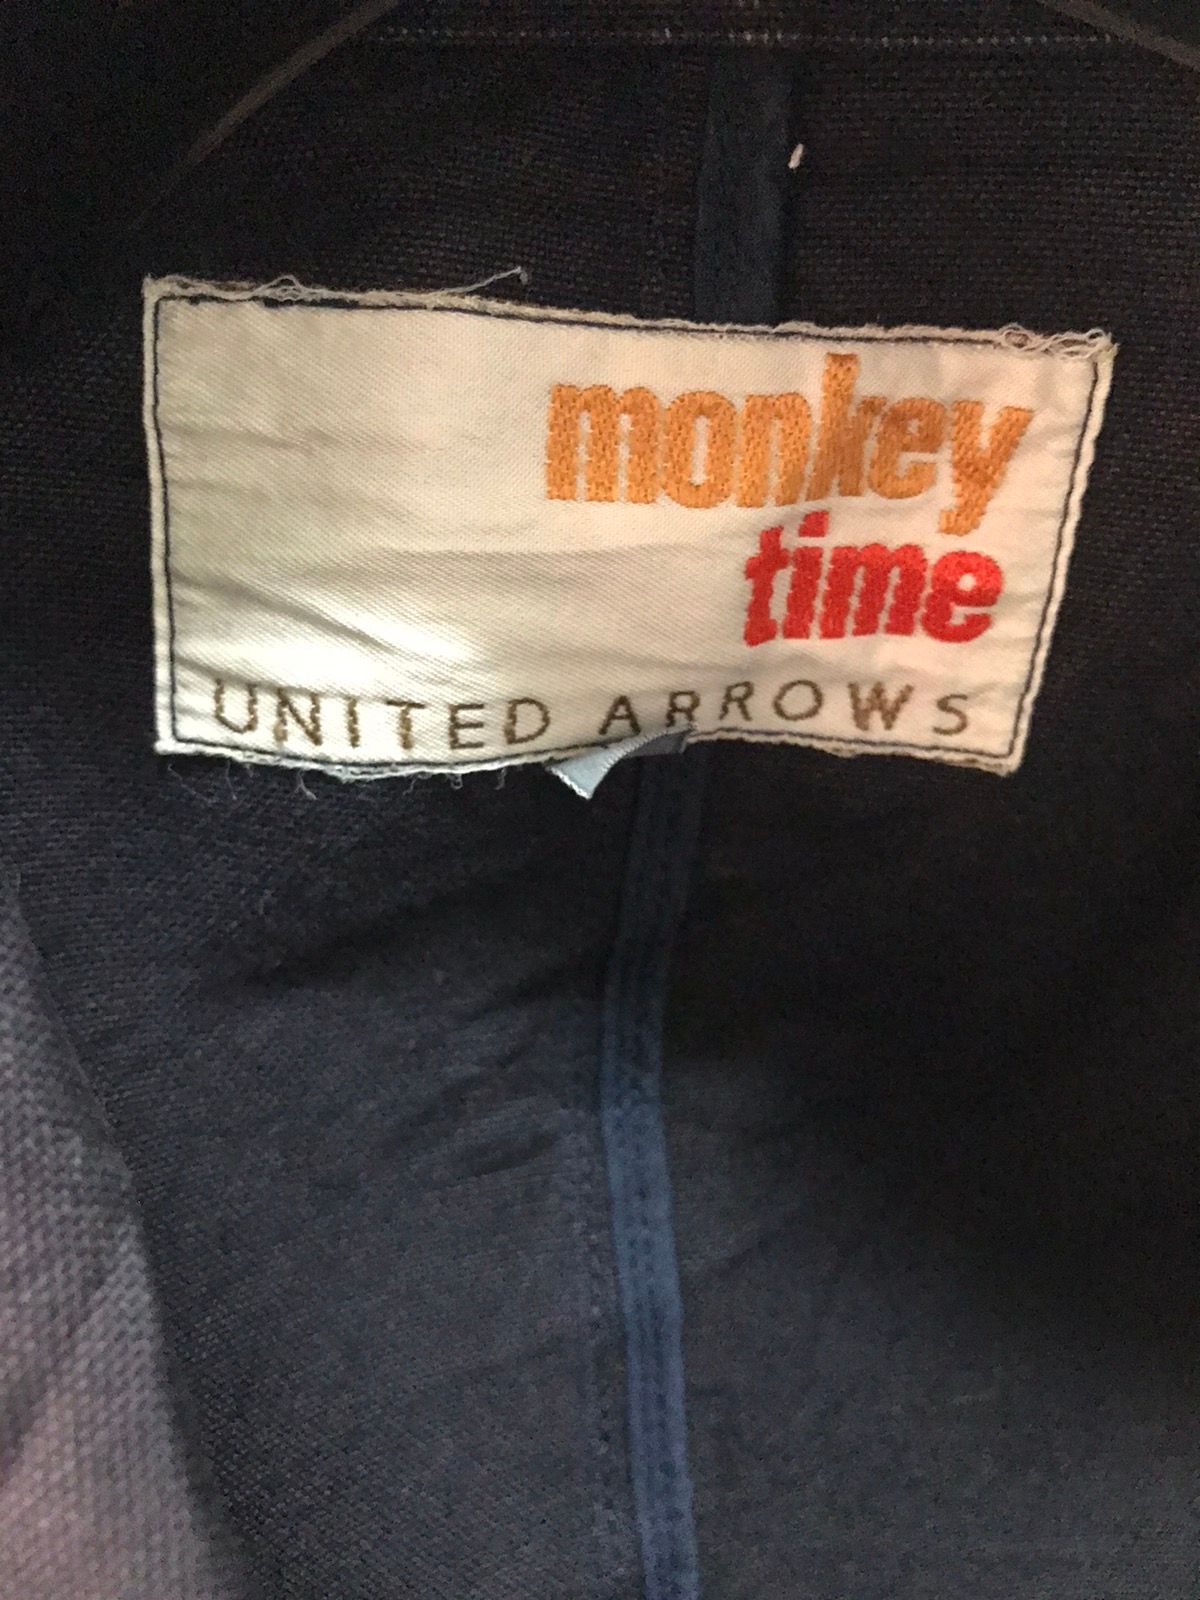 Japanese Brand Monkey time jacket Size US M / EU 48-50 / 2 - 2 Preview